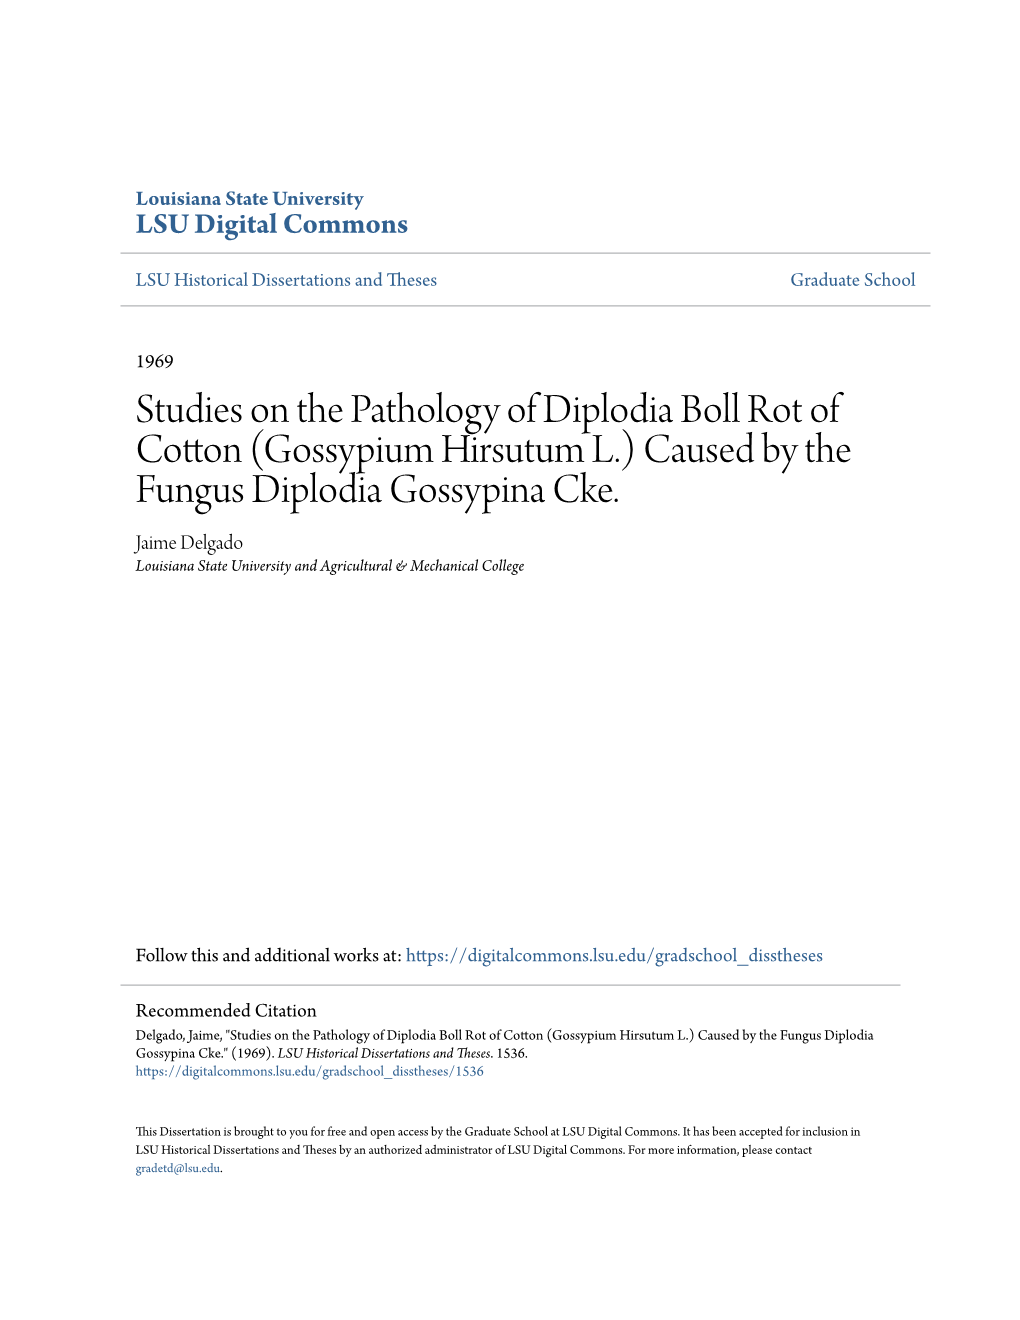 Studies on the Pathology of Diplodia Boll Rot of Cotton (Gossypium Hirsutum L.) Caused by the Fungus Diplodia Gossypina Cke